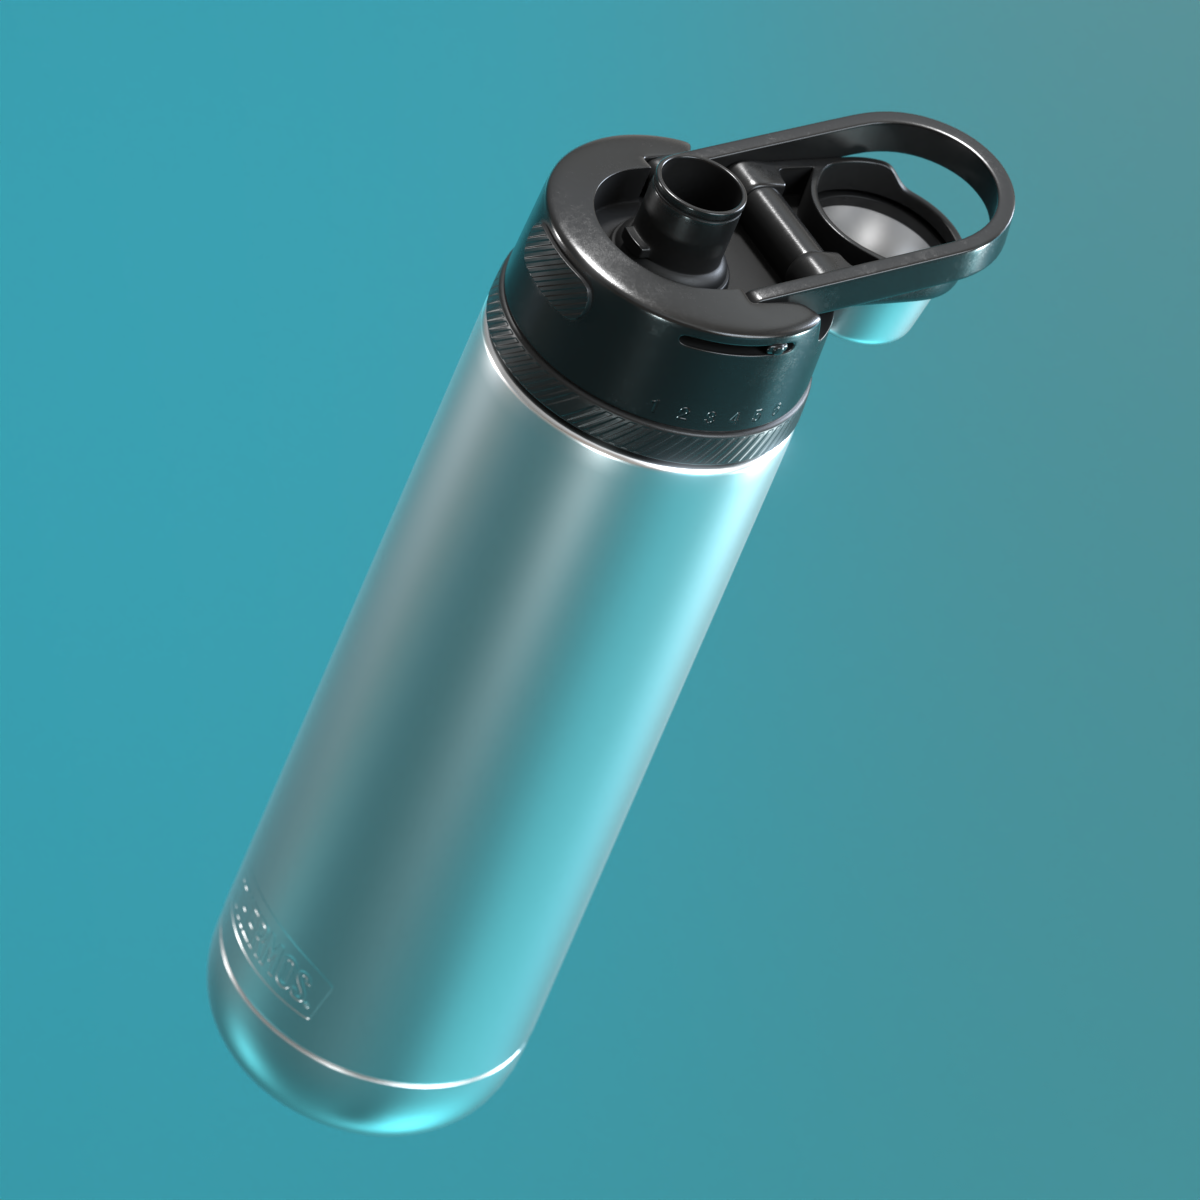 thermos bottle blender Render realistic lowpoly 3D cgı